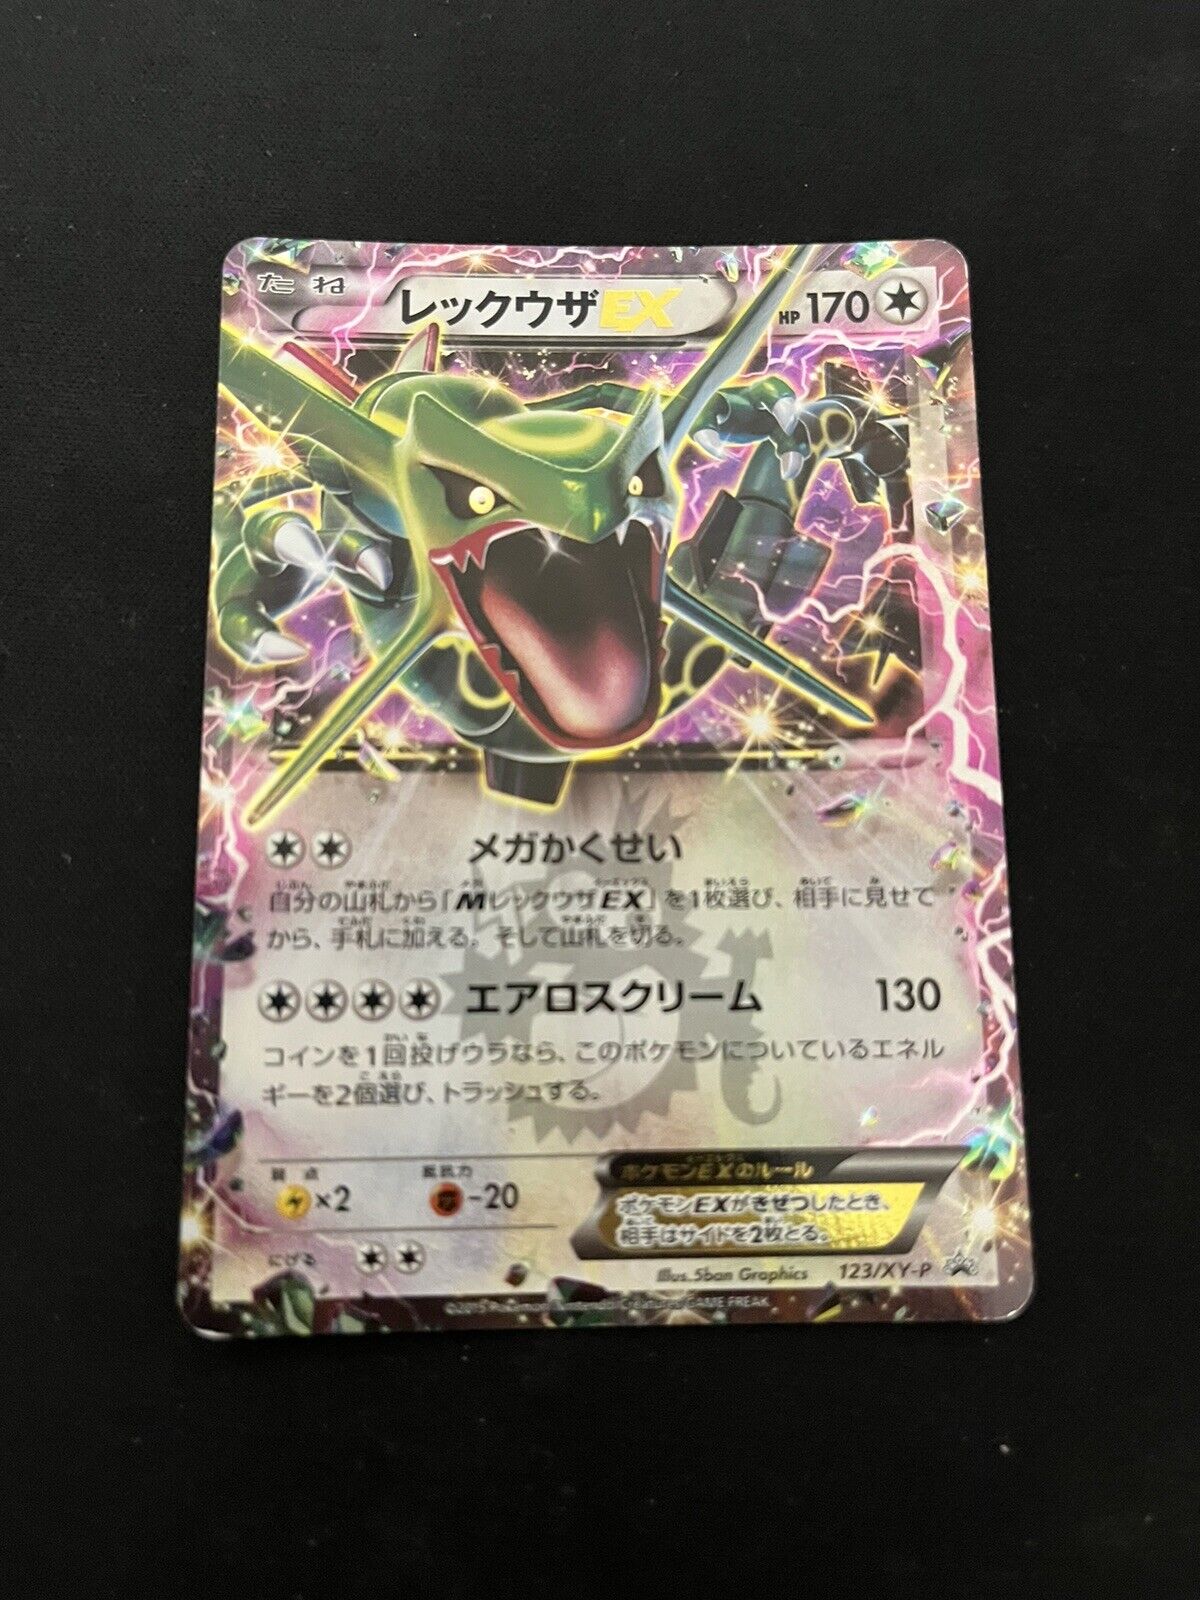 Rayquaza EX 123/XY-P Pokémon Cards PL Promo Japanese Holo Rare Vintage Shiny